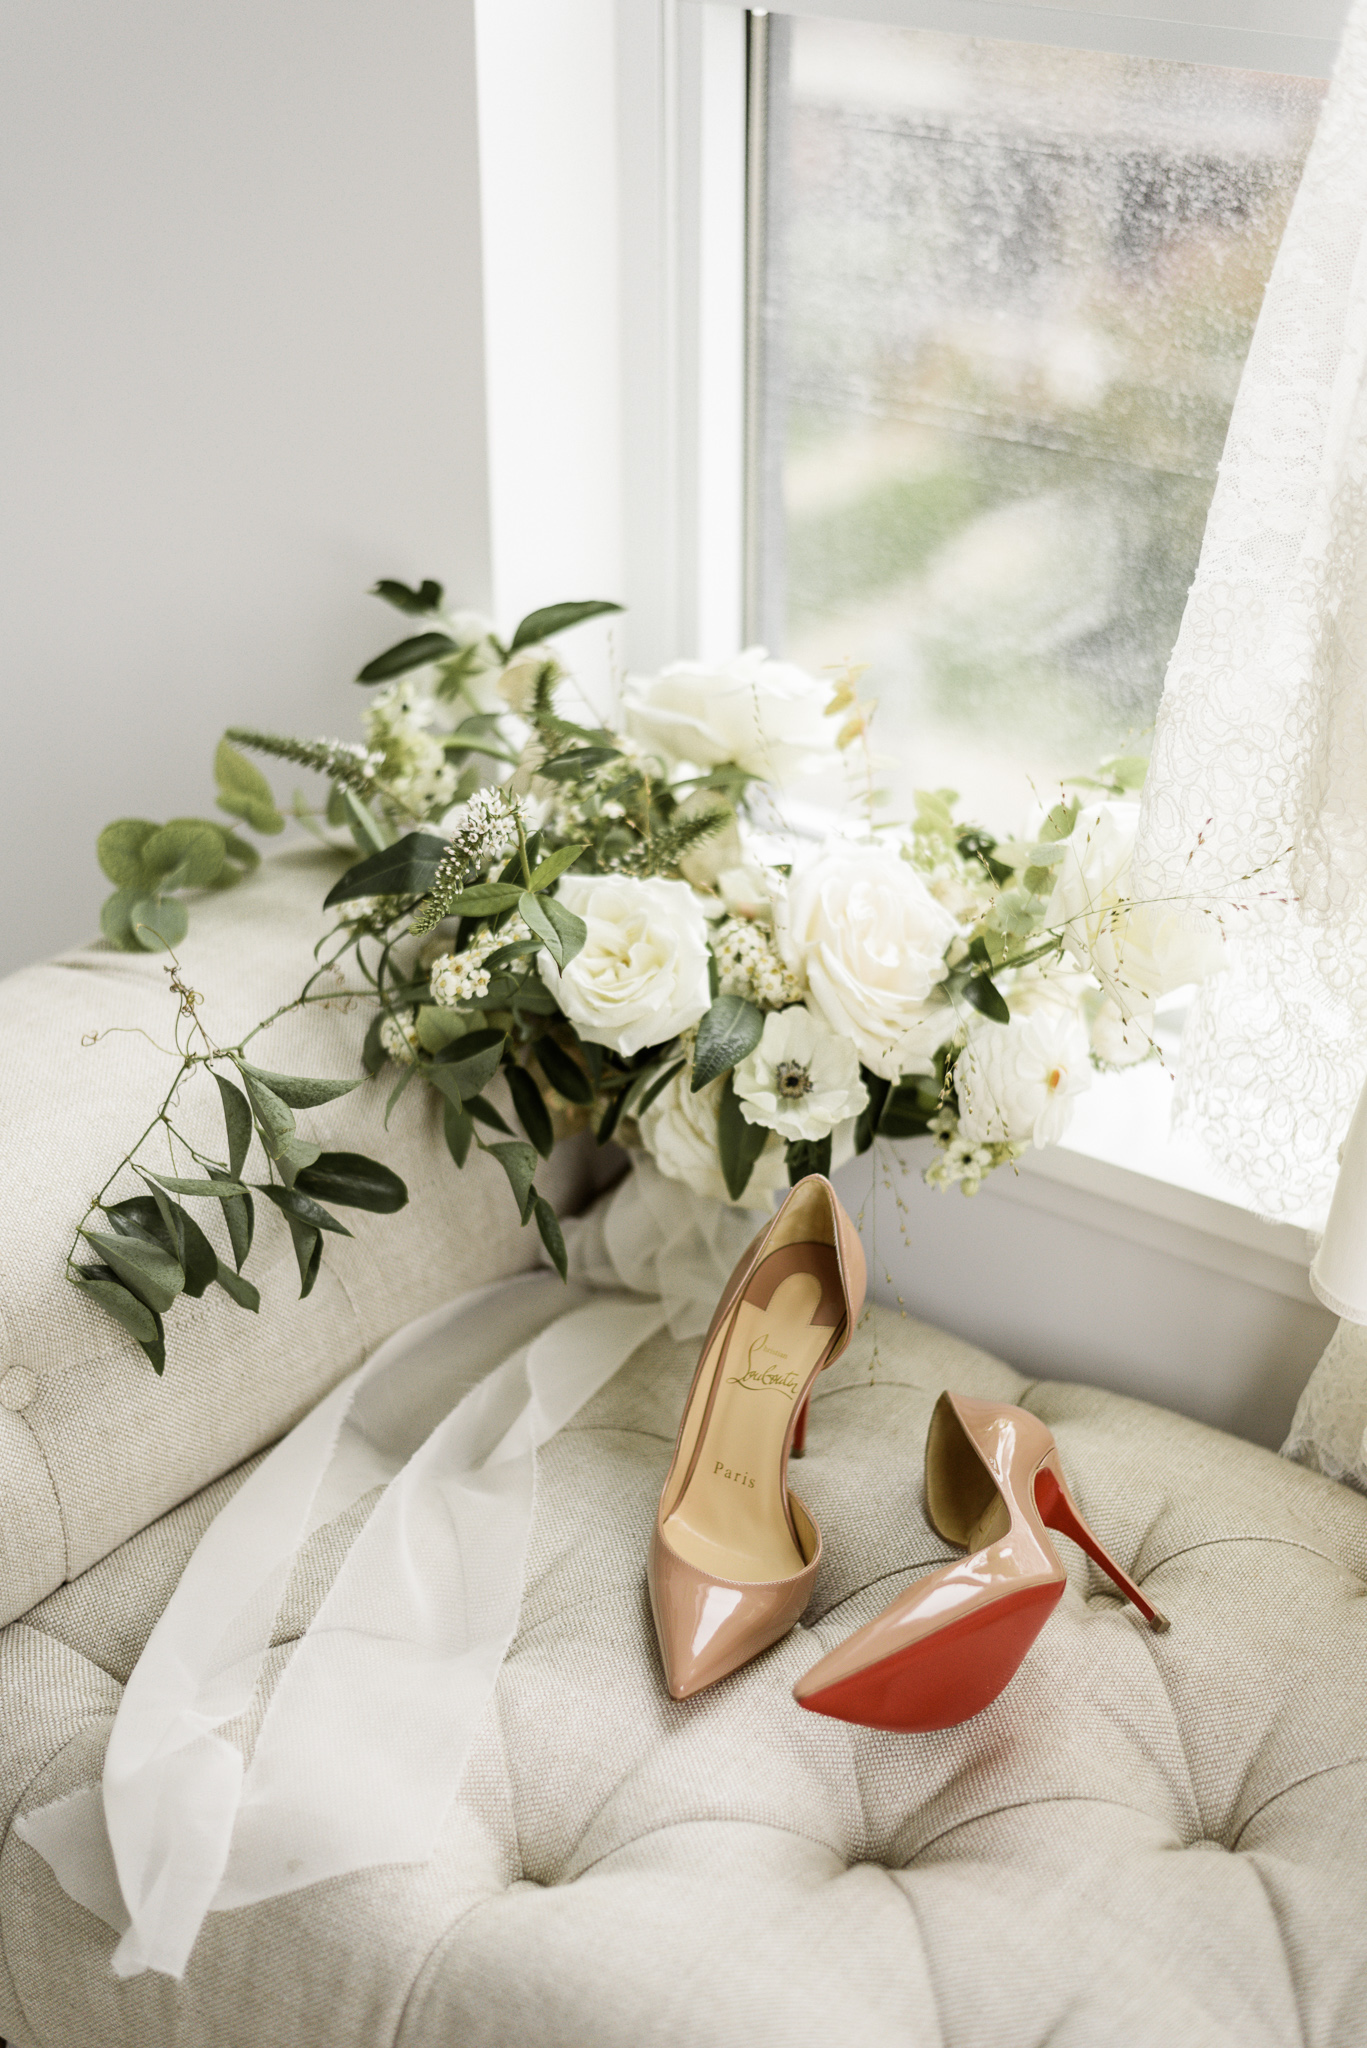 Louboutin wedding shoes with bridal bouquet detail shot